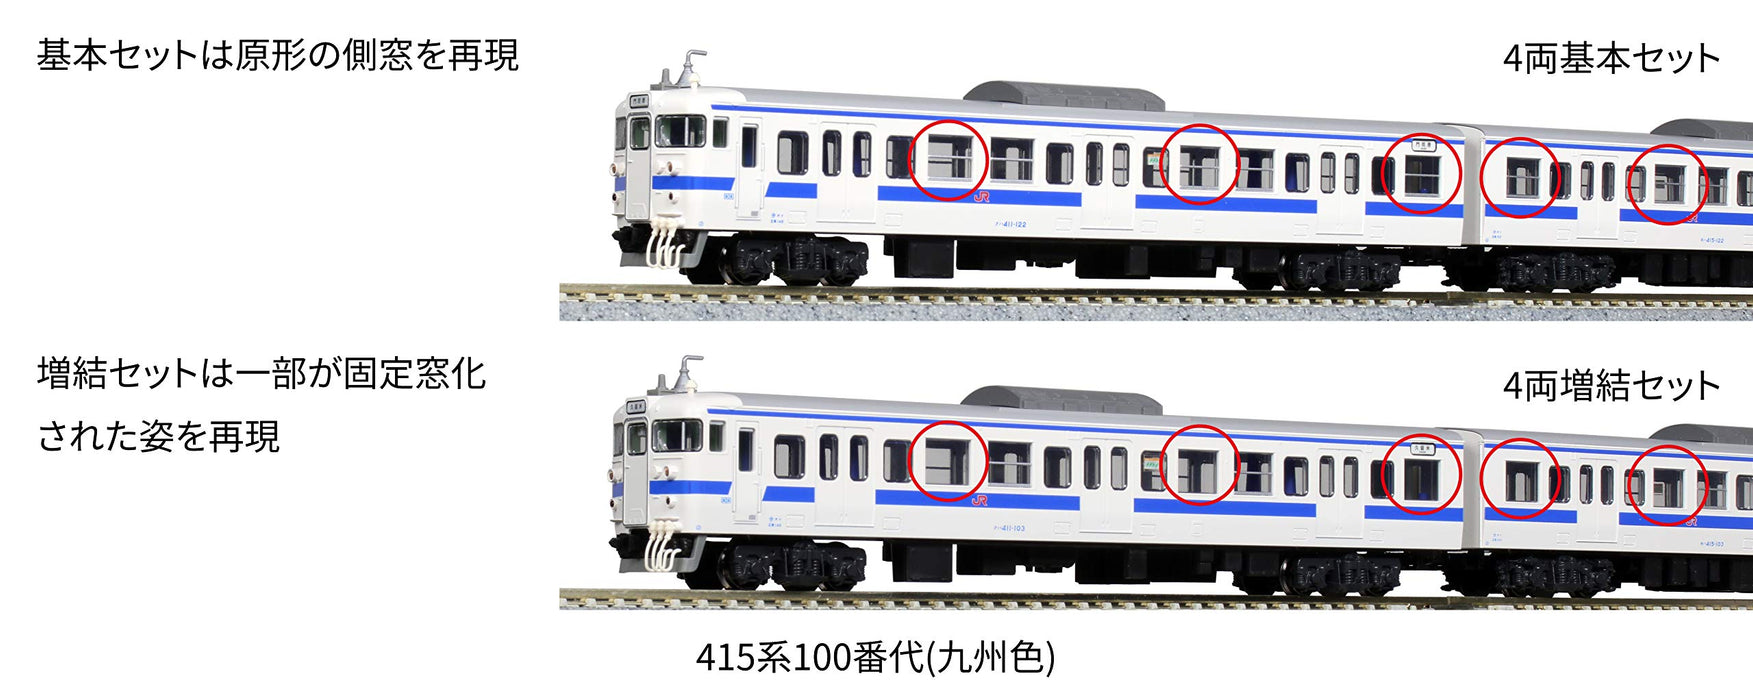 Kato N Gauge 415 Series 4-Car Railway Model Train Set Kyushu Color 10-1538